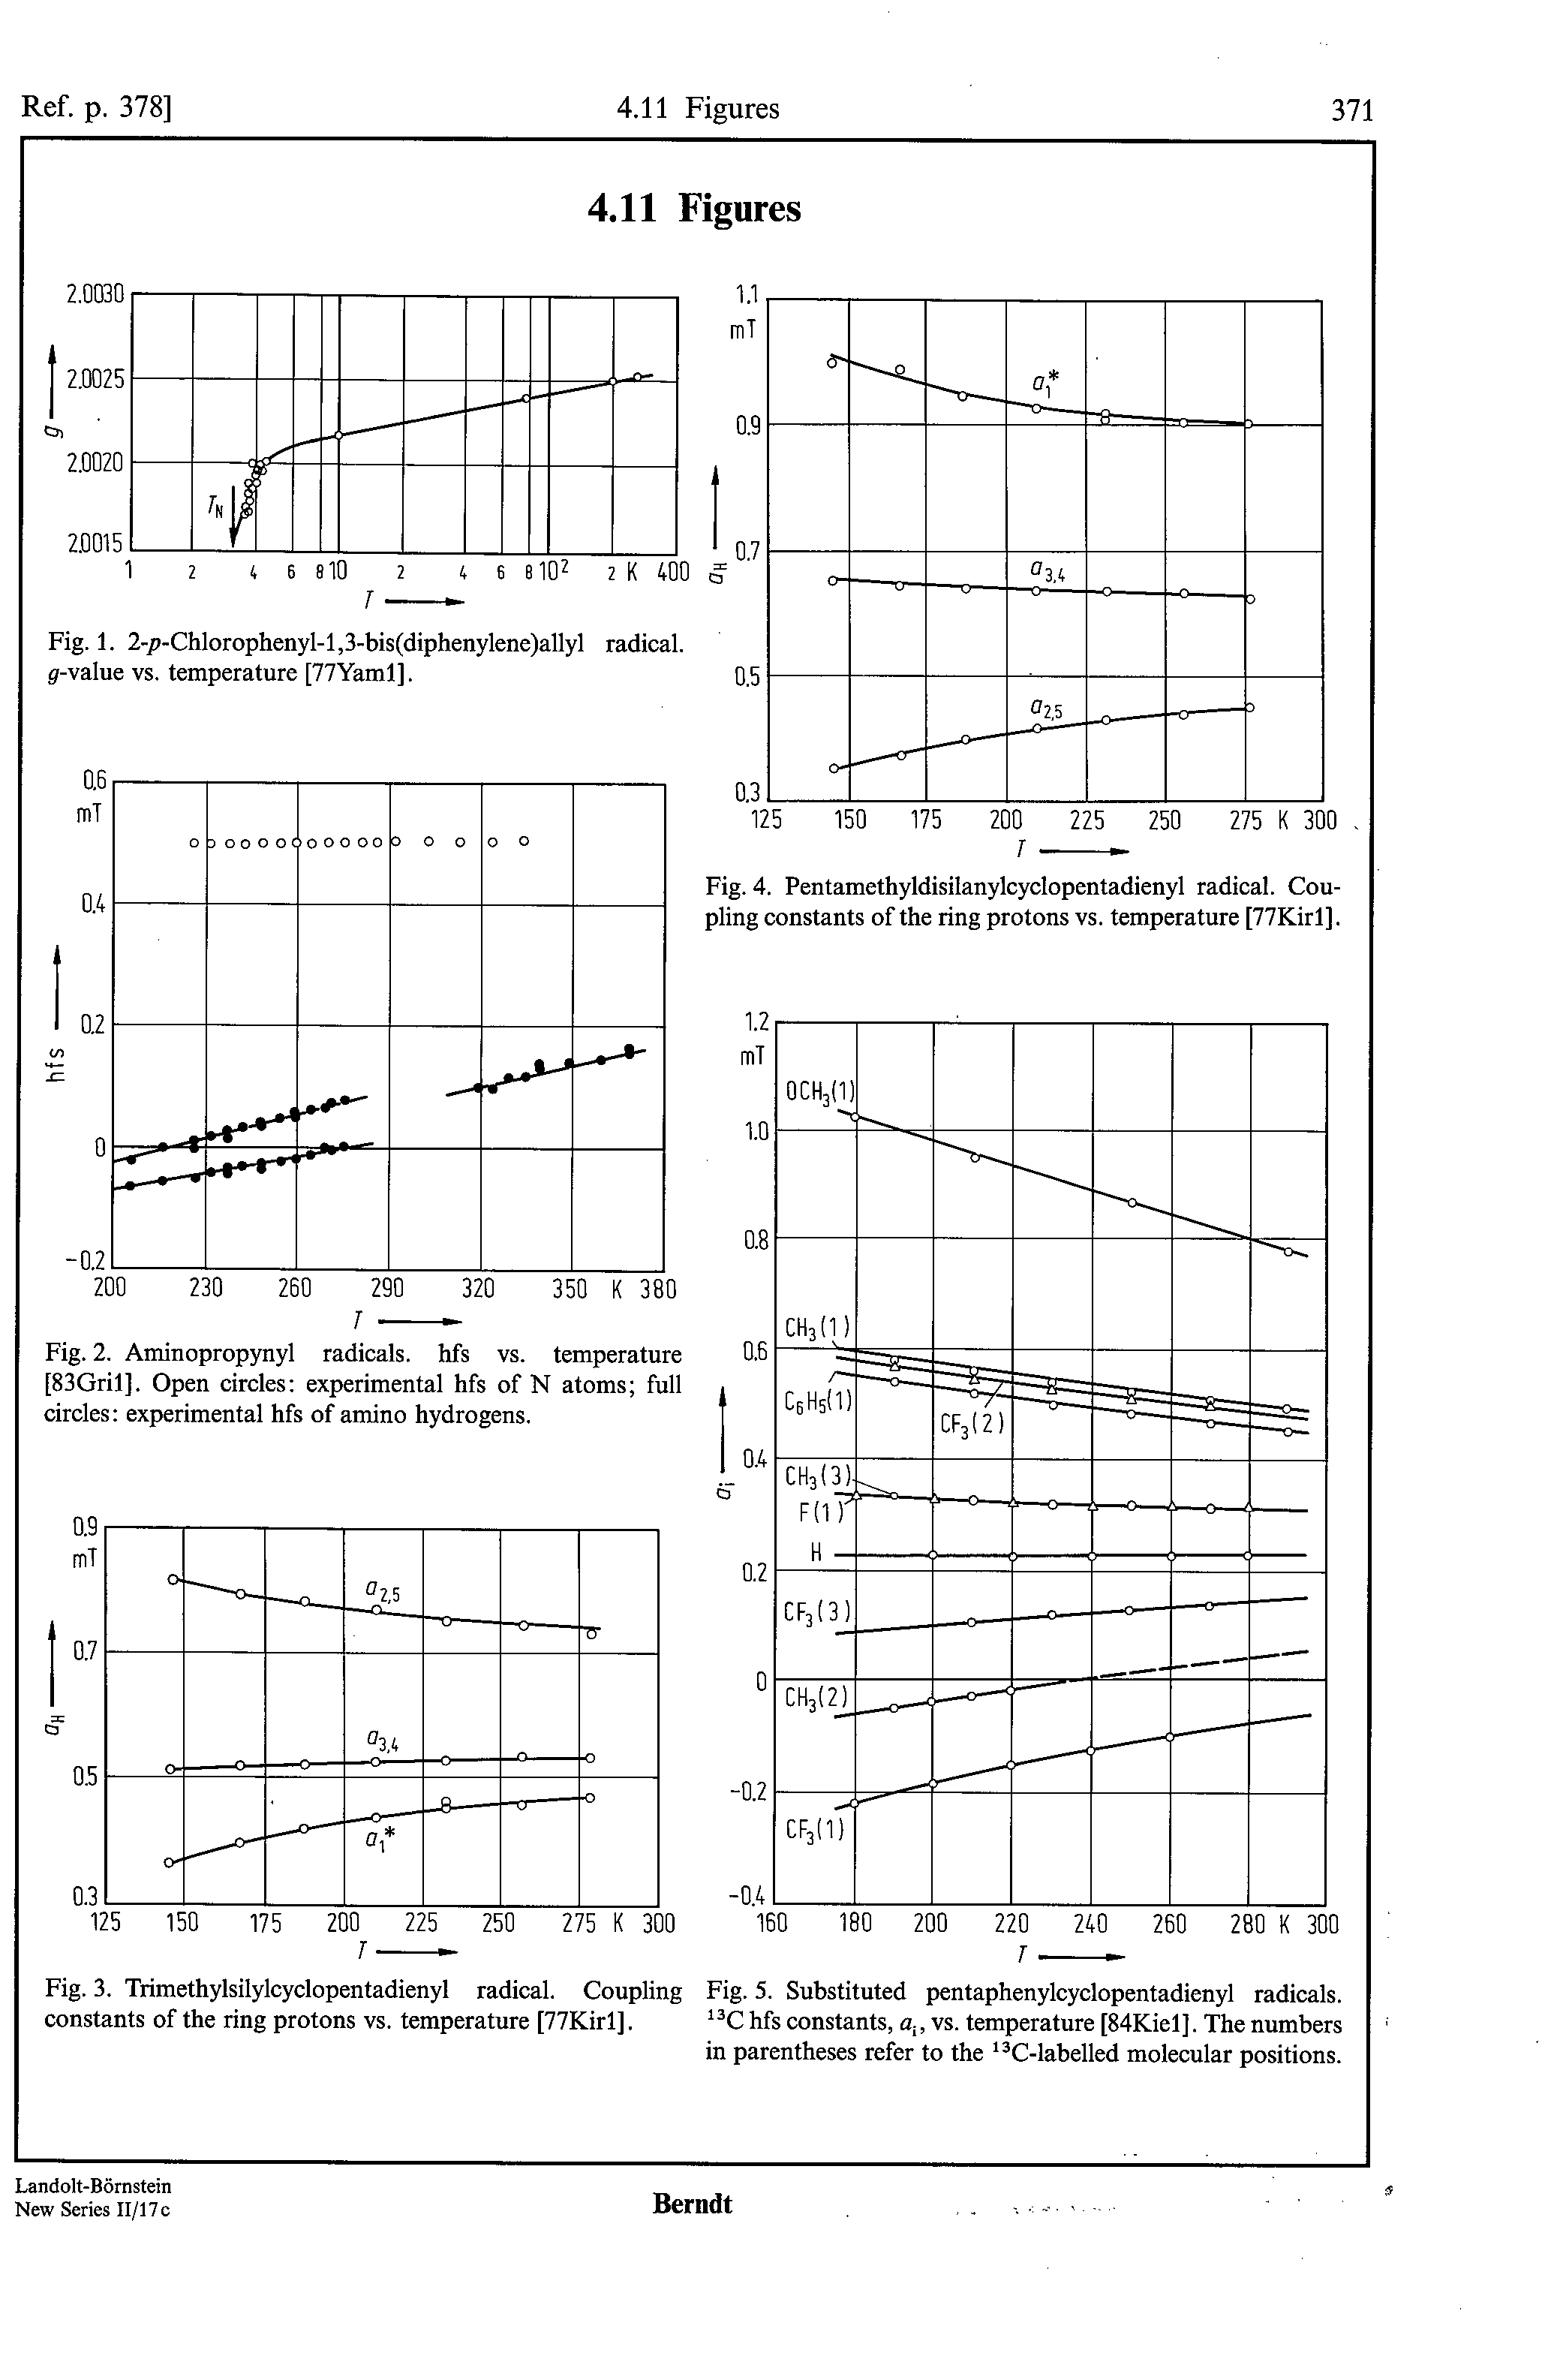 Fig. 1. 2- >-Chlorophenyl-l,3-bis(diphenylene)allyl radical, g-value vs. temperature [77Yaml].